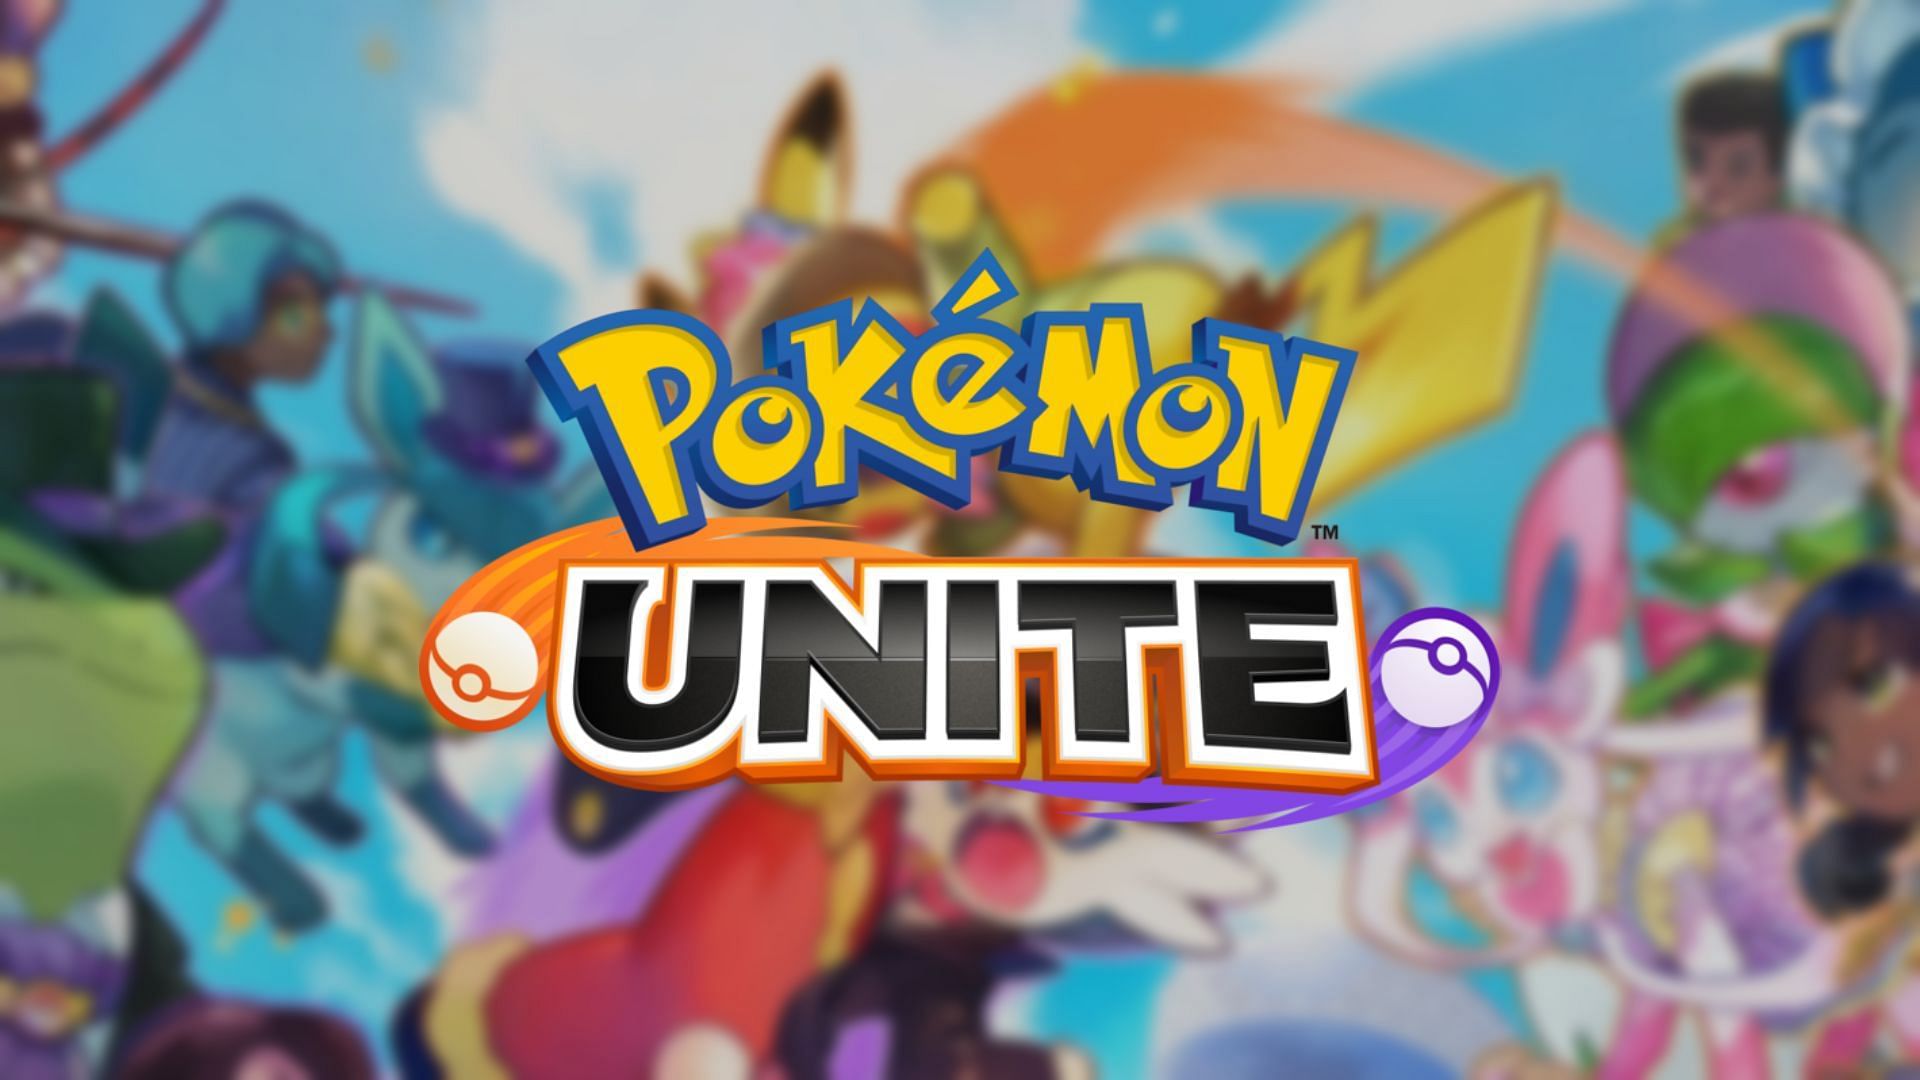 Pokemon Unite crosses 100m downloads (Image via Pokemon Unite)